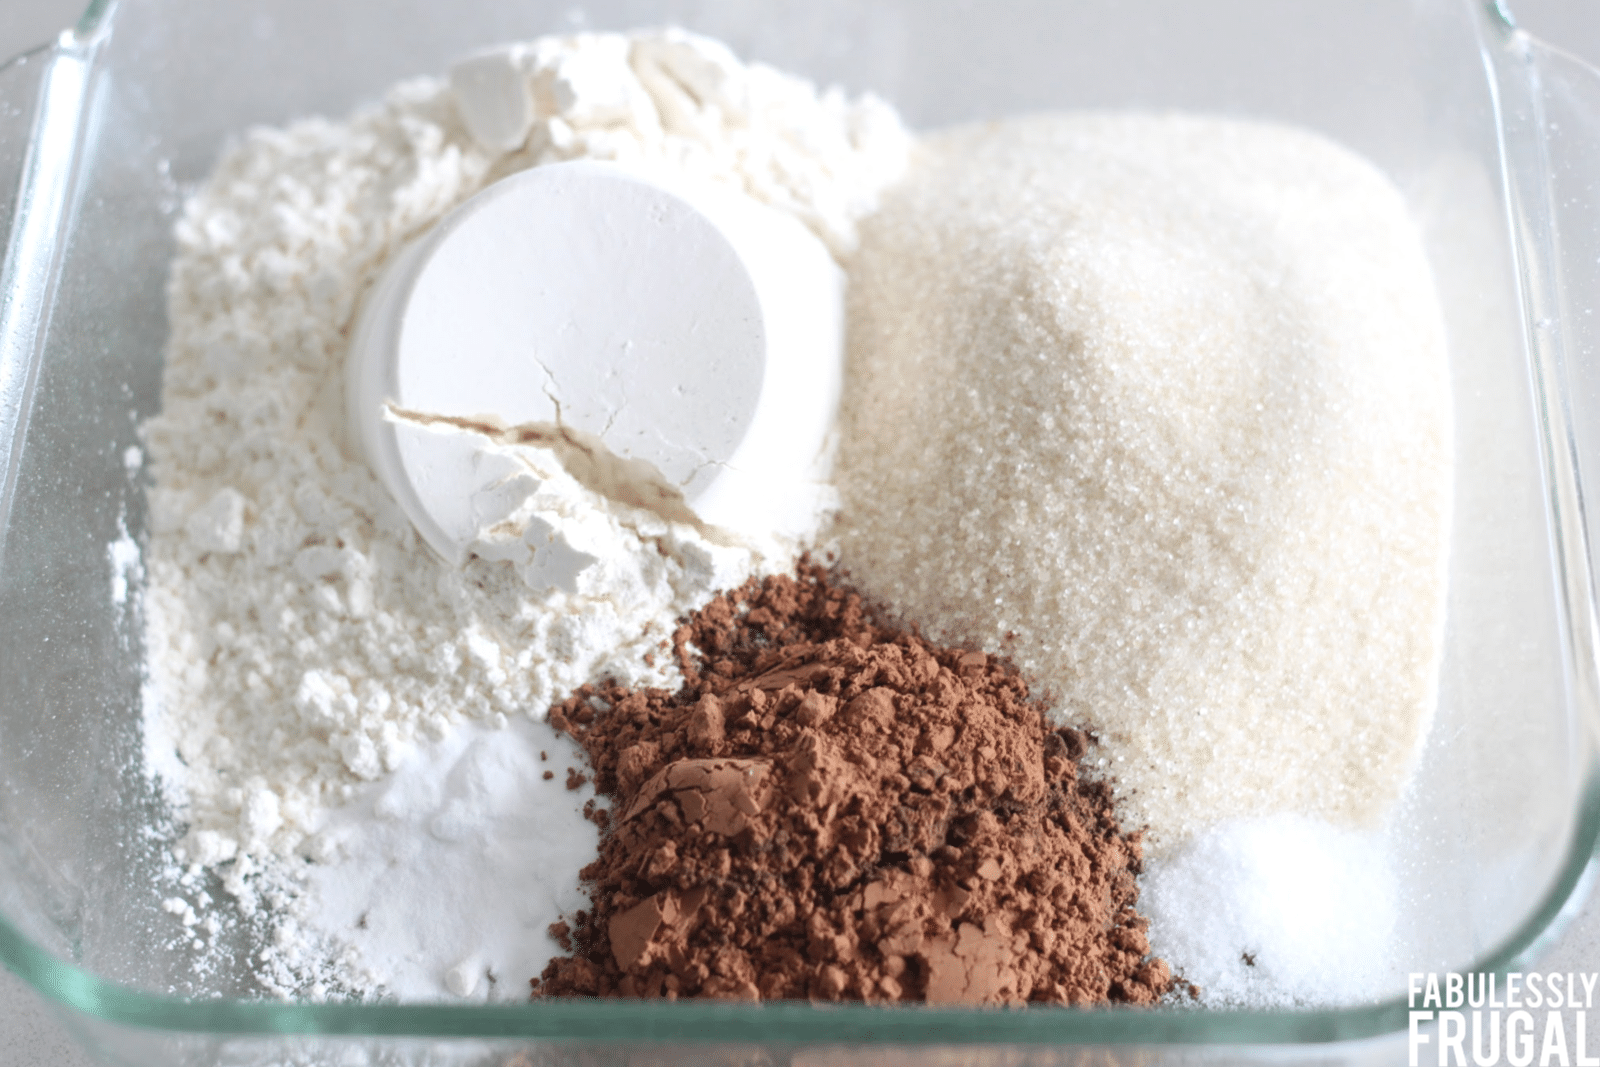  flour, sugar, cocoa, salt, and baking soda in cake pan